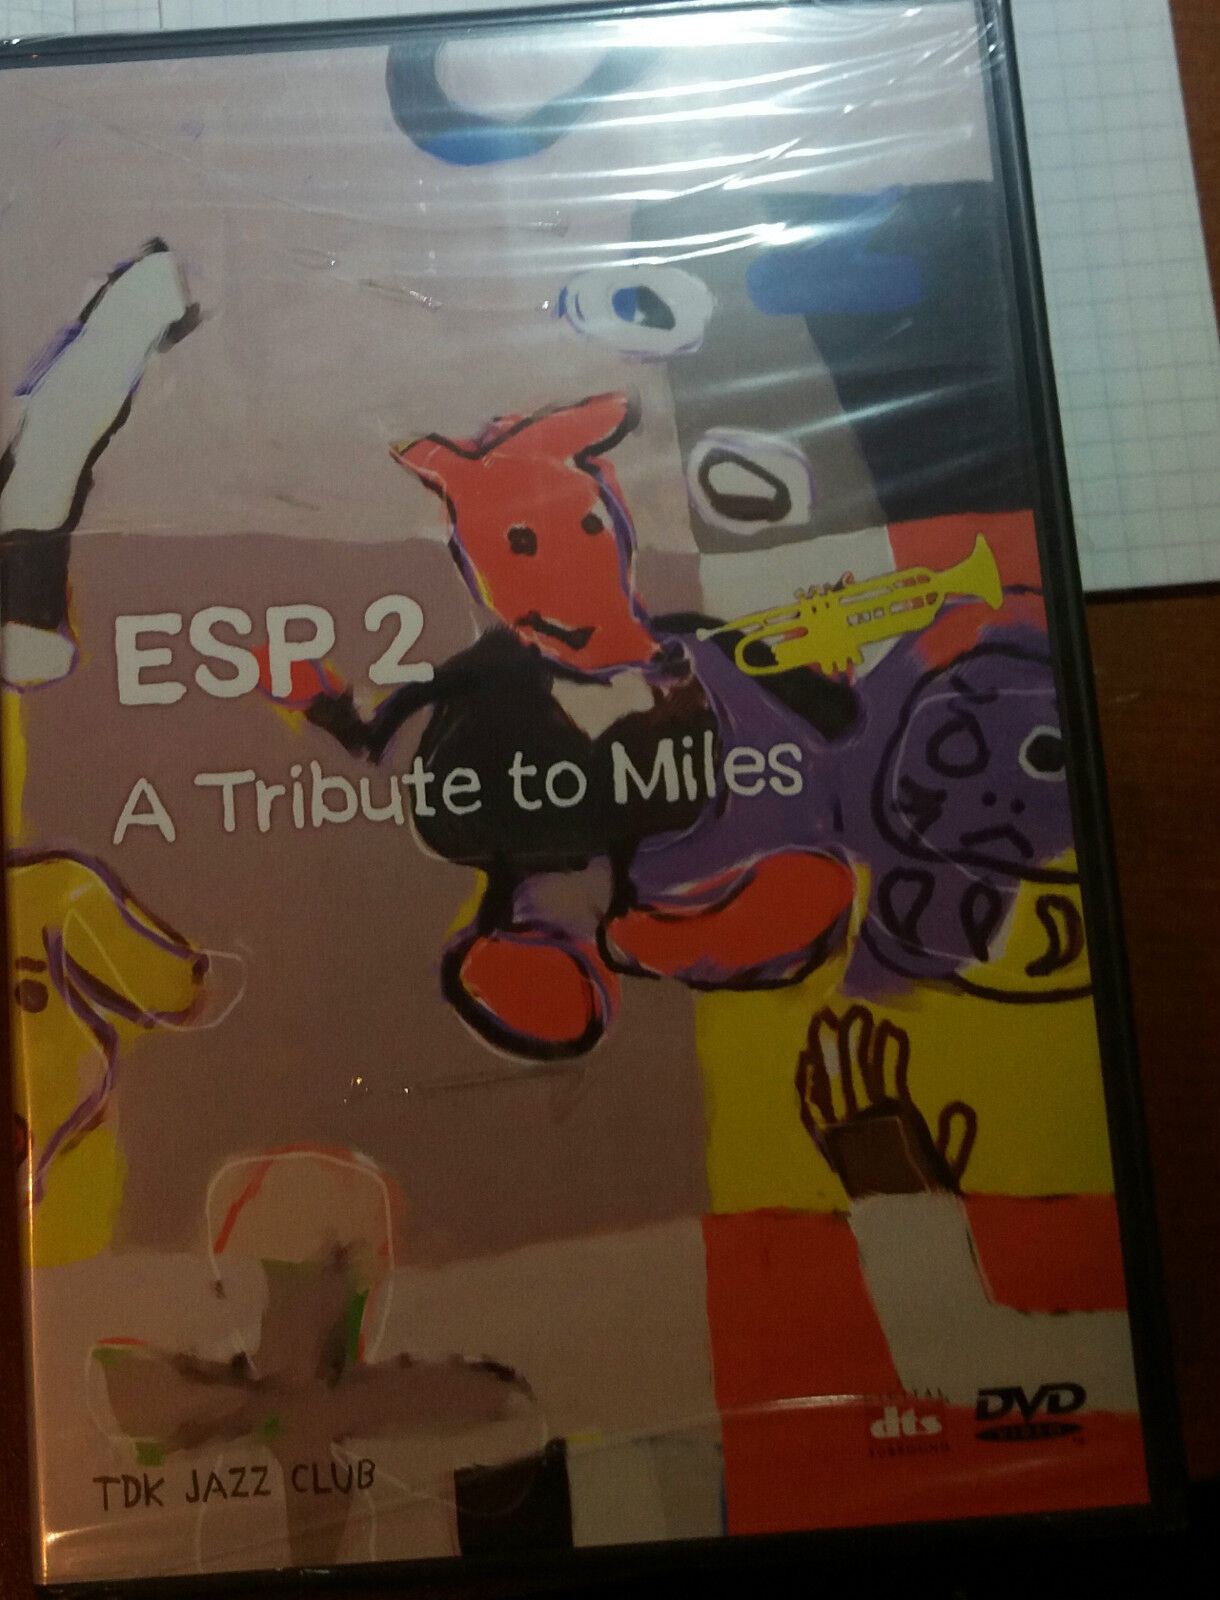 ESP 2 A TRIBUTE TO MILES - ATTORI VARI - JAZZ CLUB - 2000 - DVD -M dvd usato